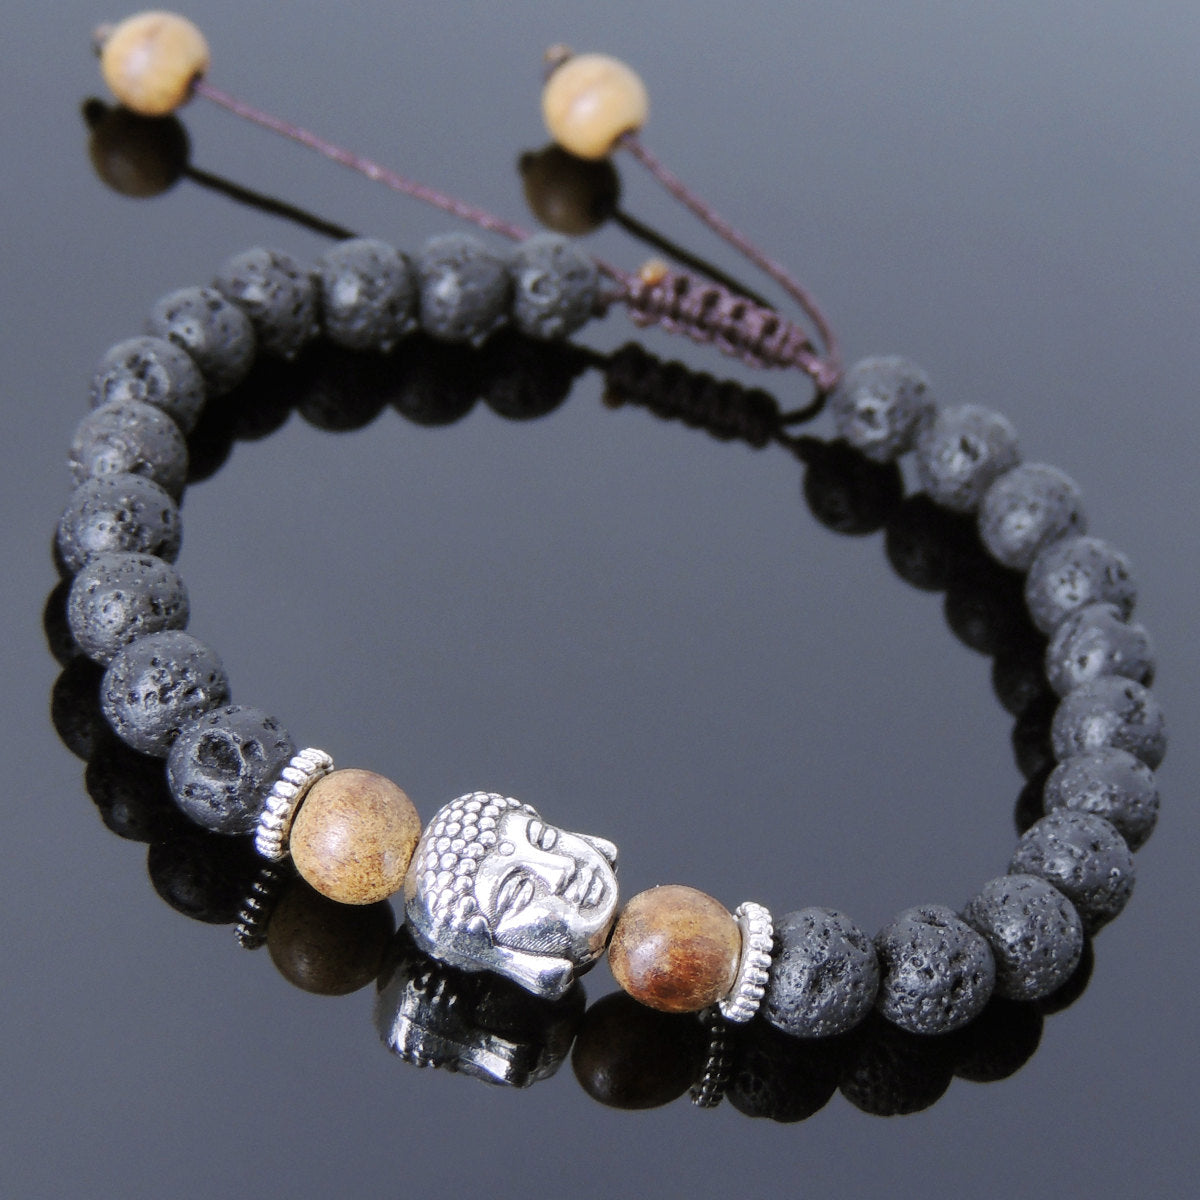 6mm Lava Rock & Agarwood Braided Adjustable Meditation Bracelet with Tibetan Silver Spacers & Sakyamuni Buddha Bead - Handmade by Gem & Silver TSB225